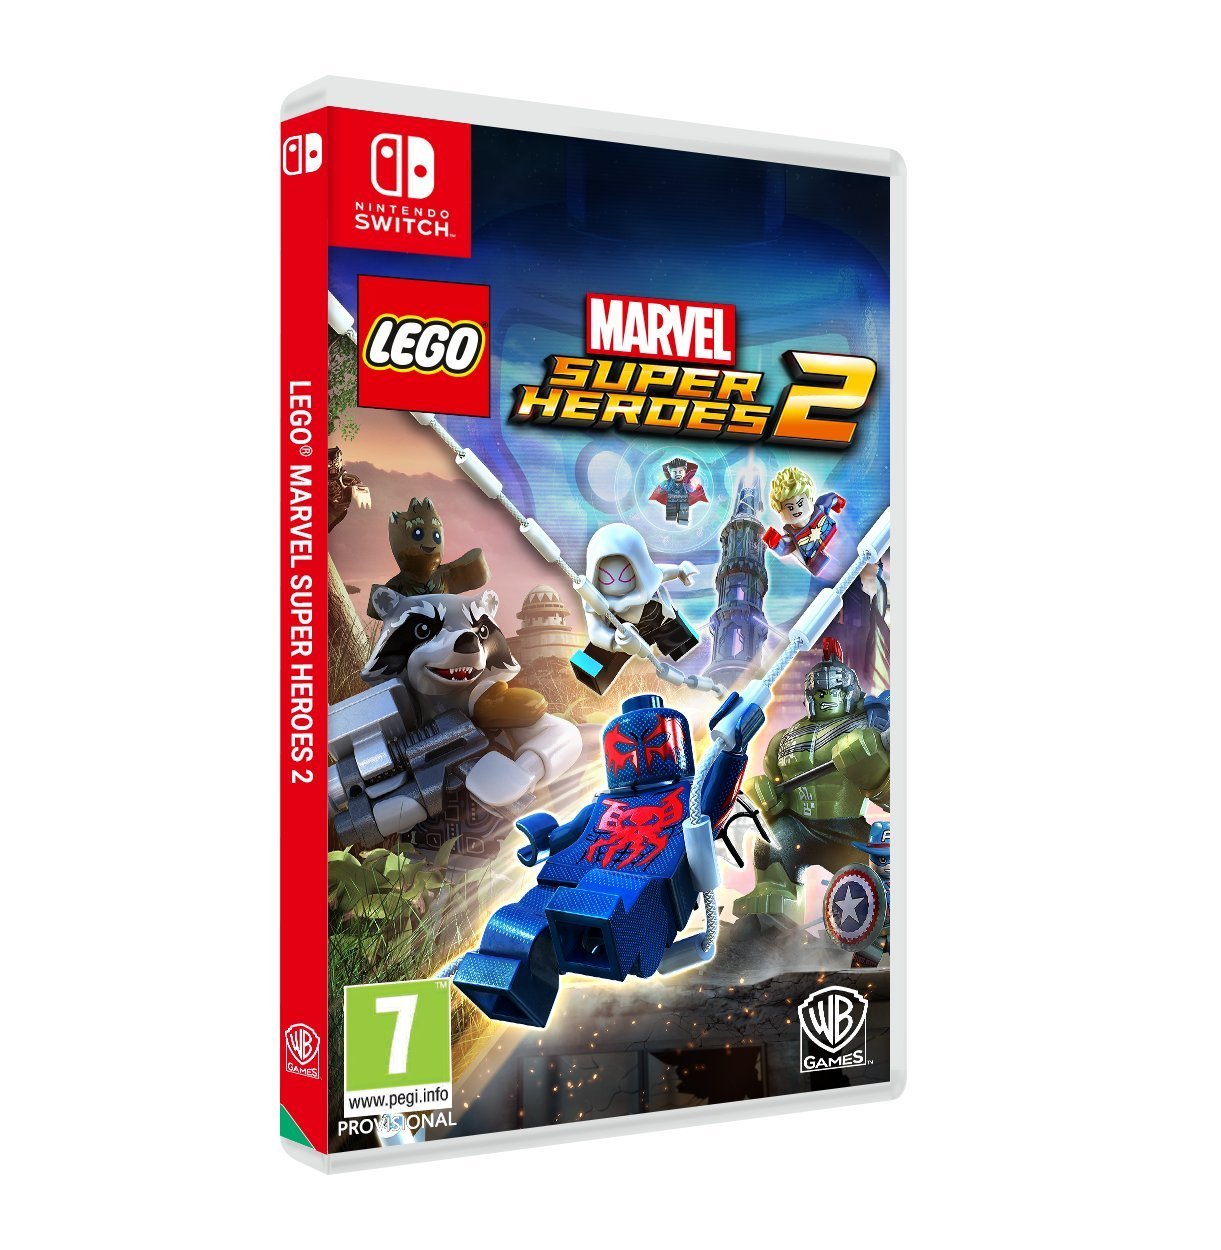 LEGO: Marvel Super Heroes 2 - Nintendo Switch - image 2 of 2